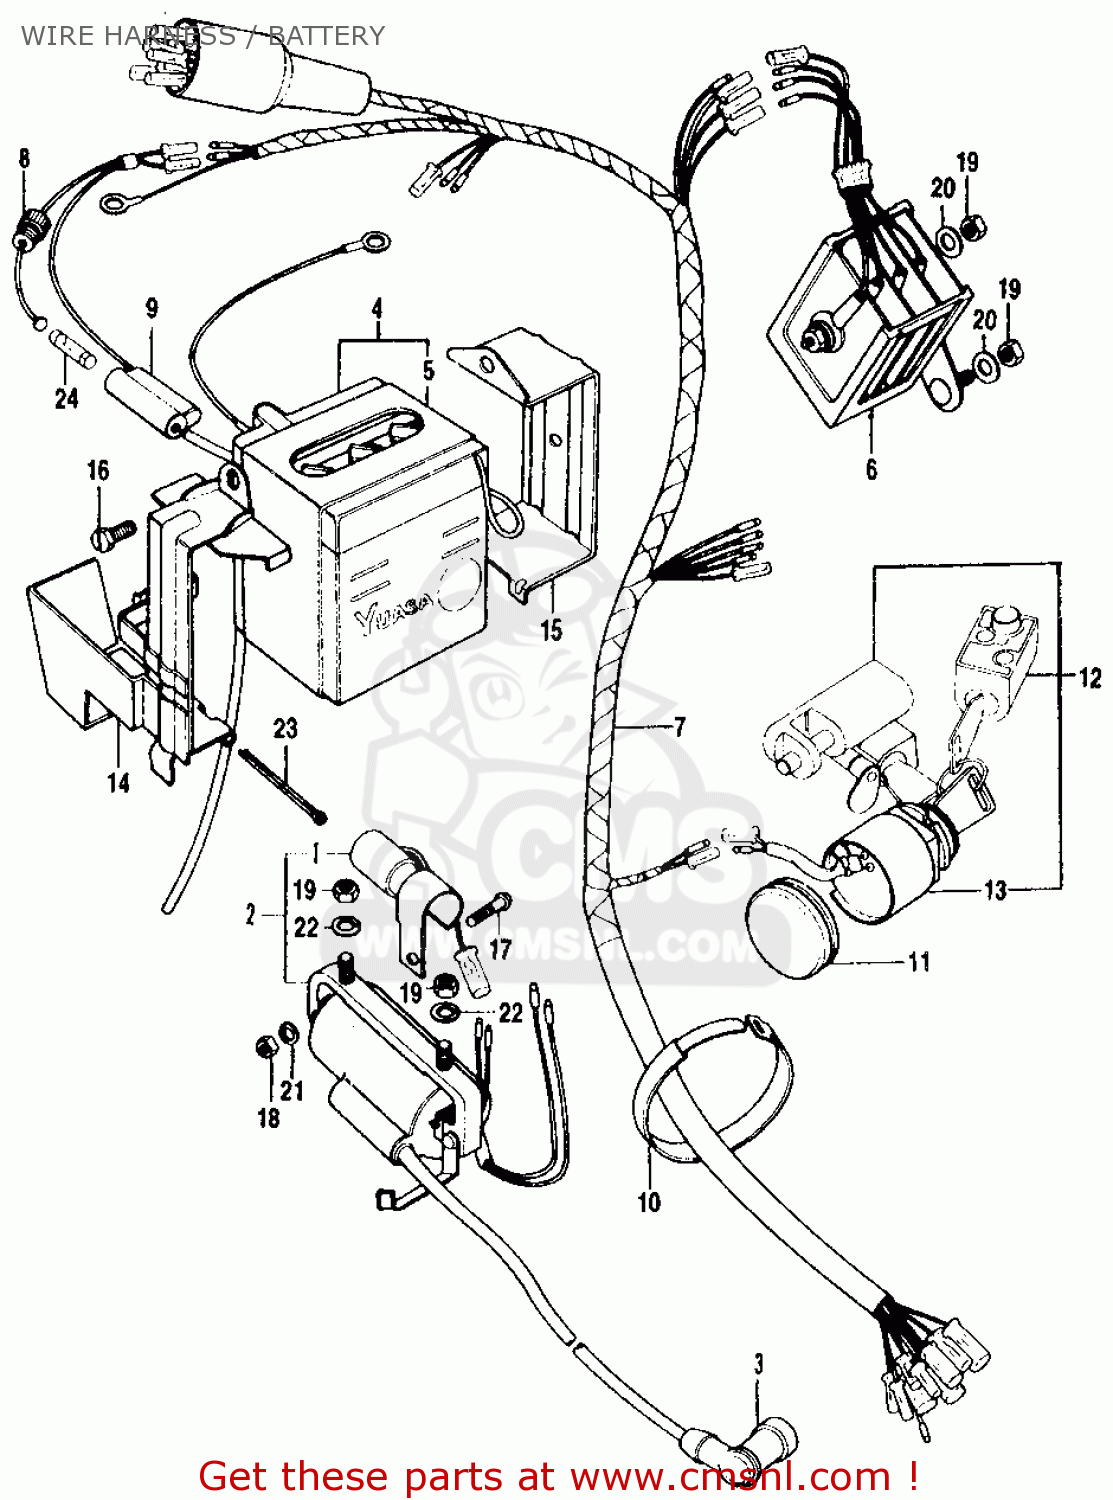 72 ct90 wiring diagram